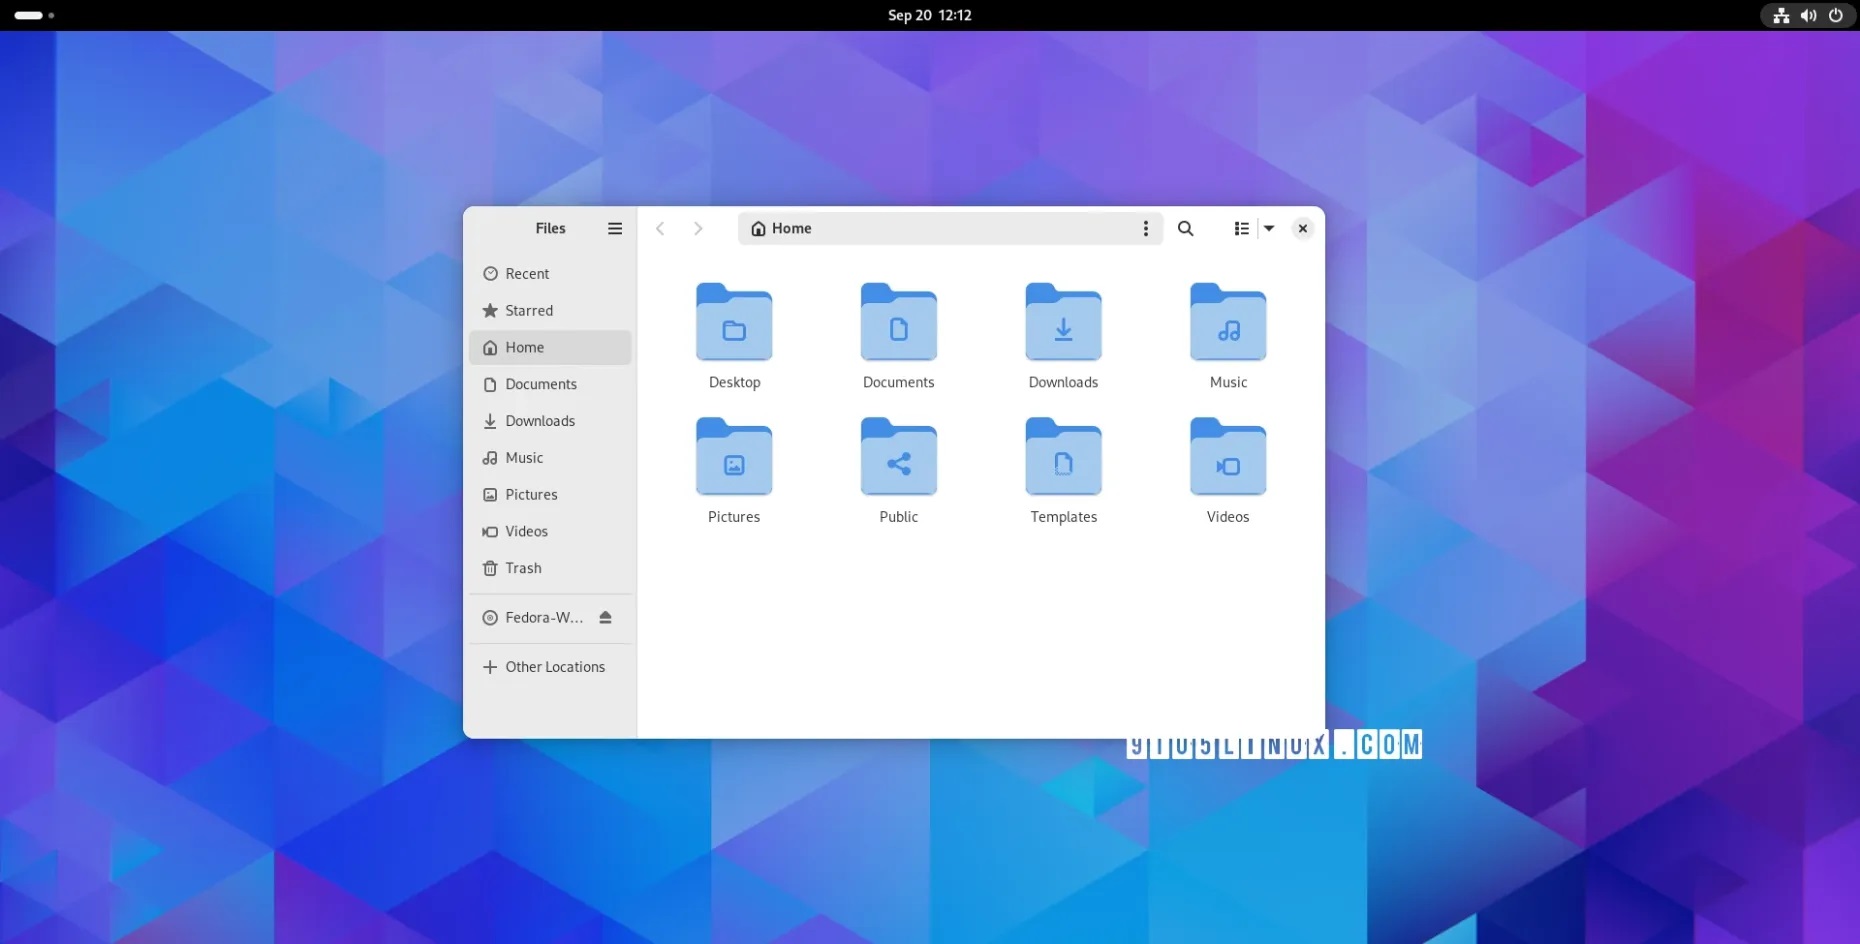 GNOME 45 "里加 "桌面环境正式发布，新功能如下